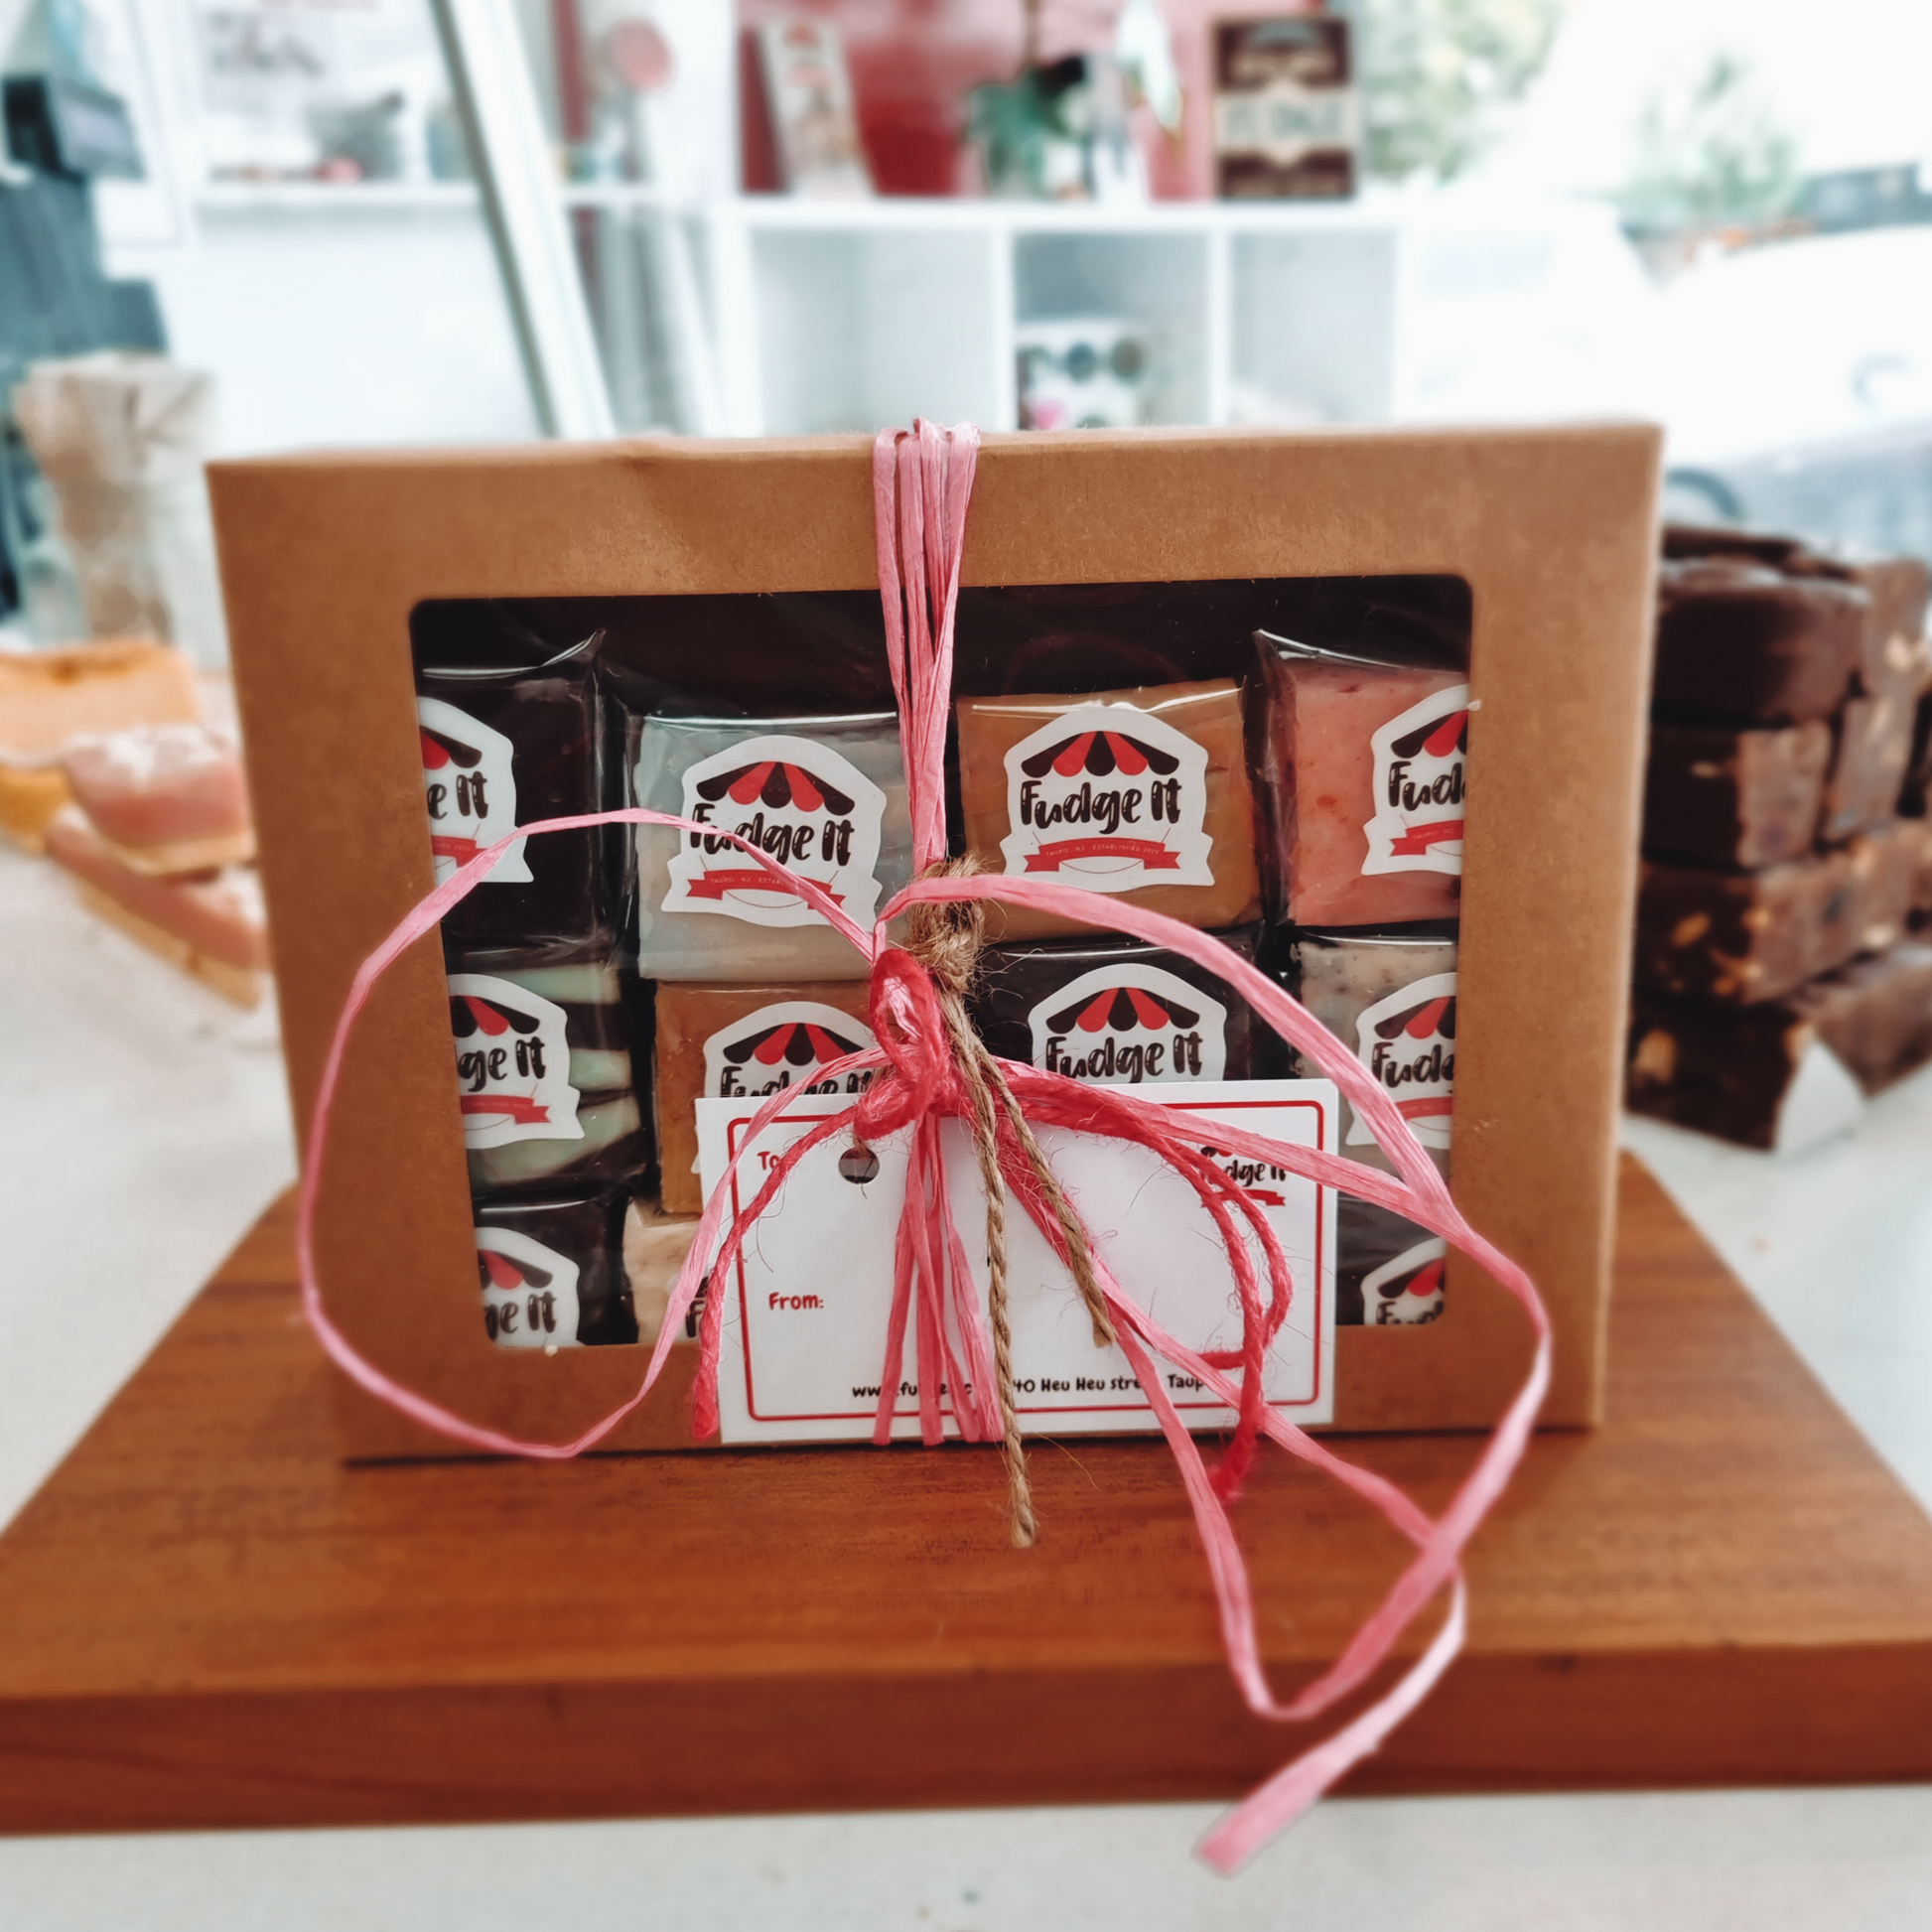 NZ fudge | Sampler box: Try our handmade fudge samples